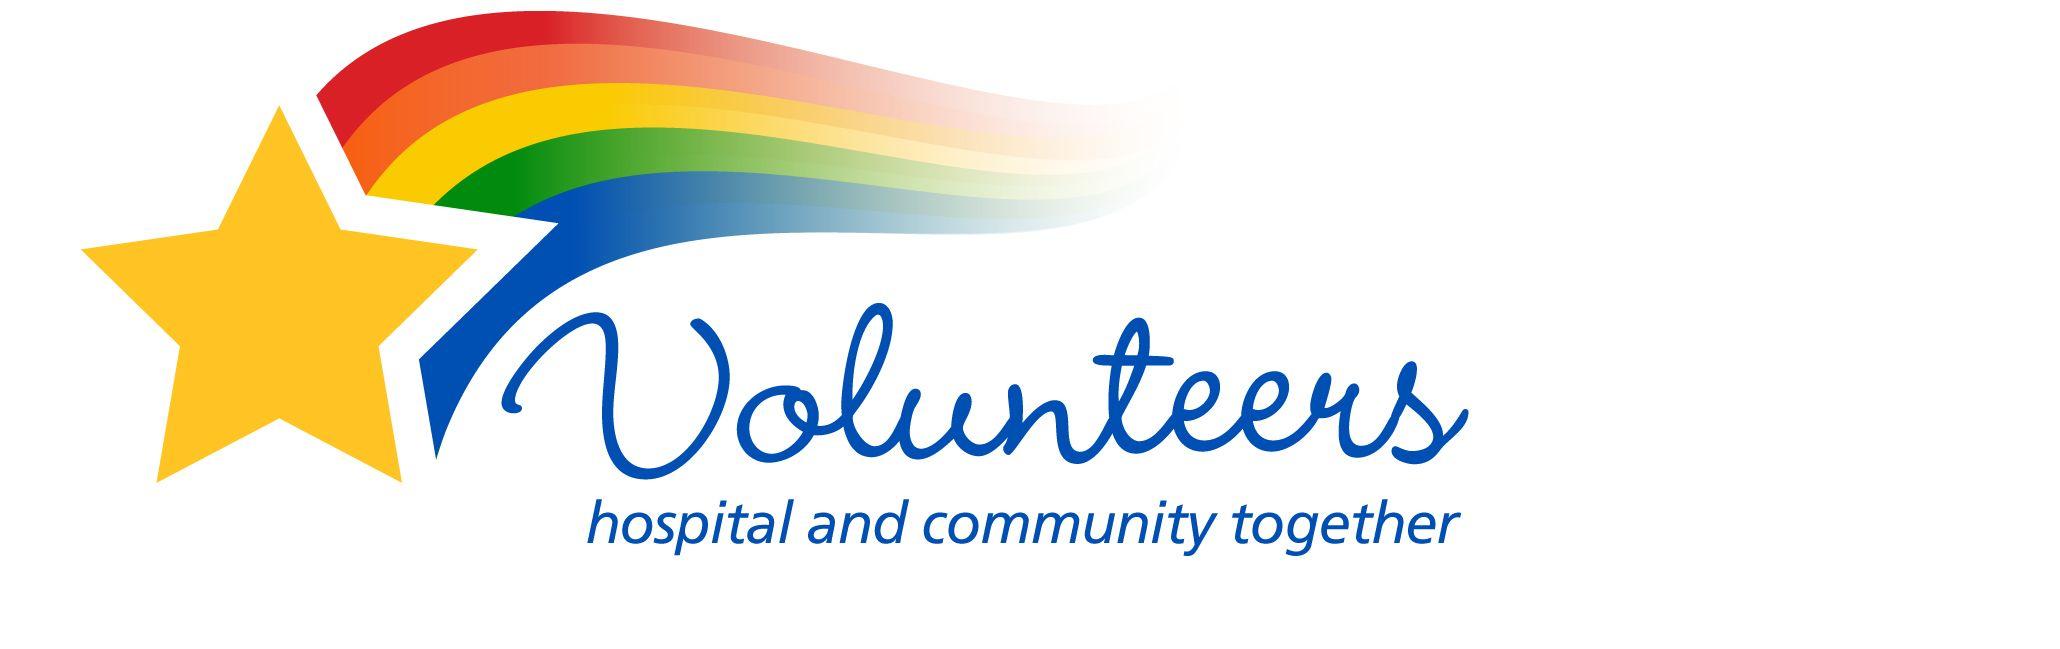 Volunteer Logo - Become a volunteer | Rotherham NHS Foundation Trust